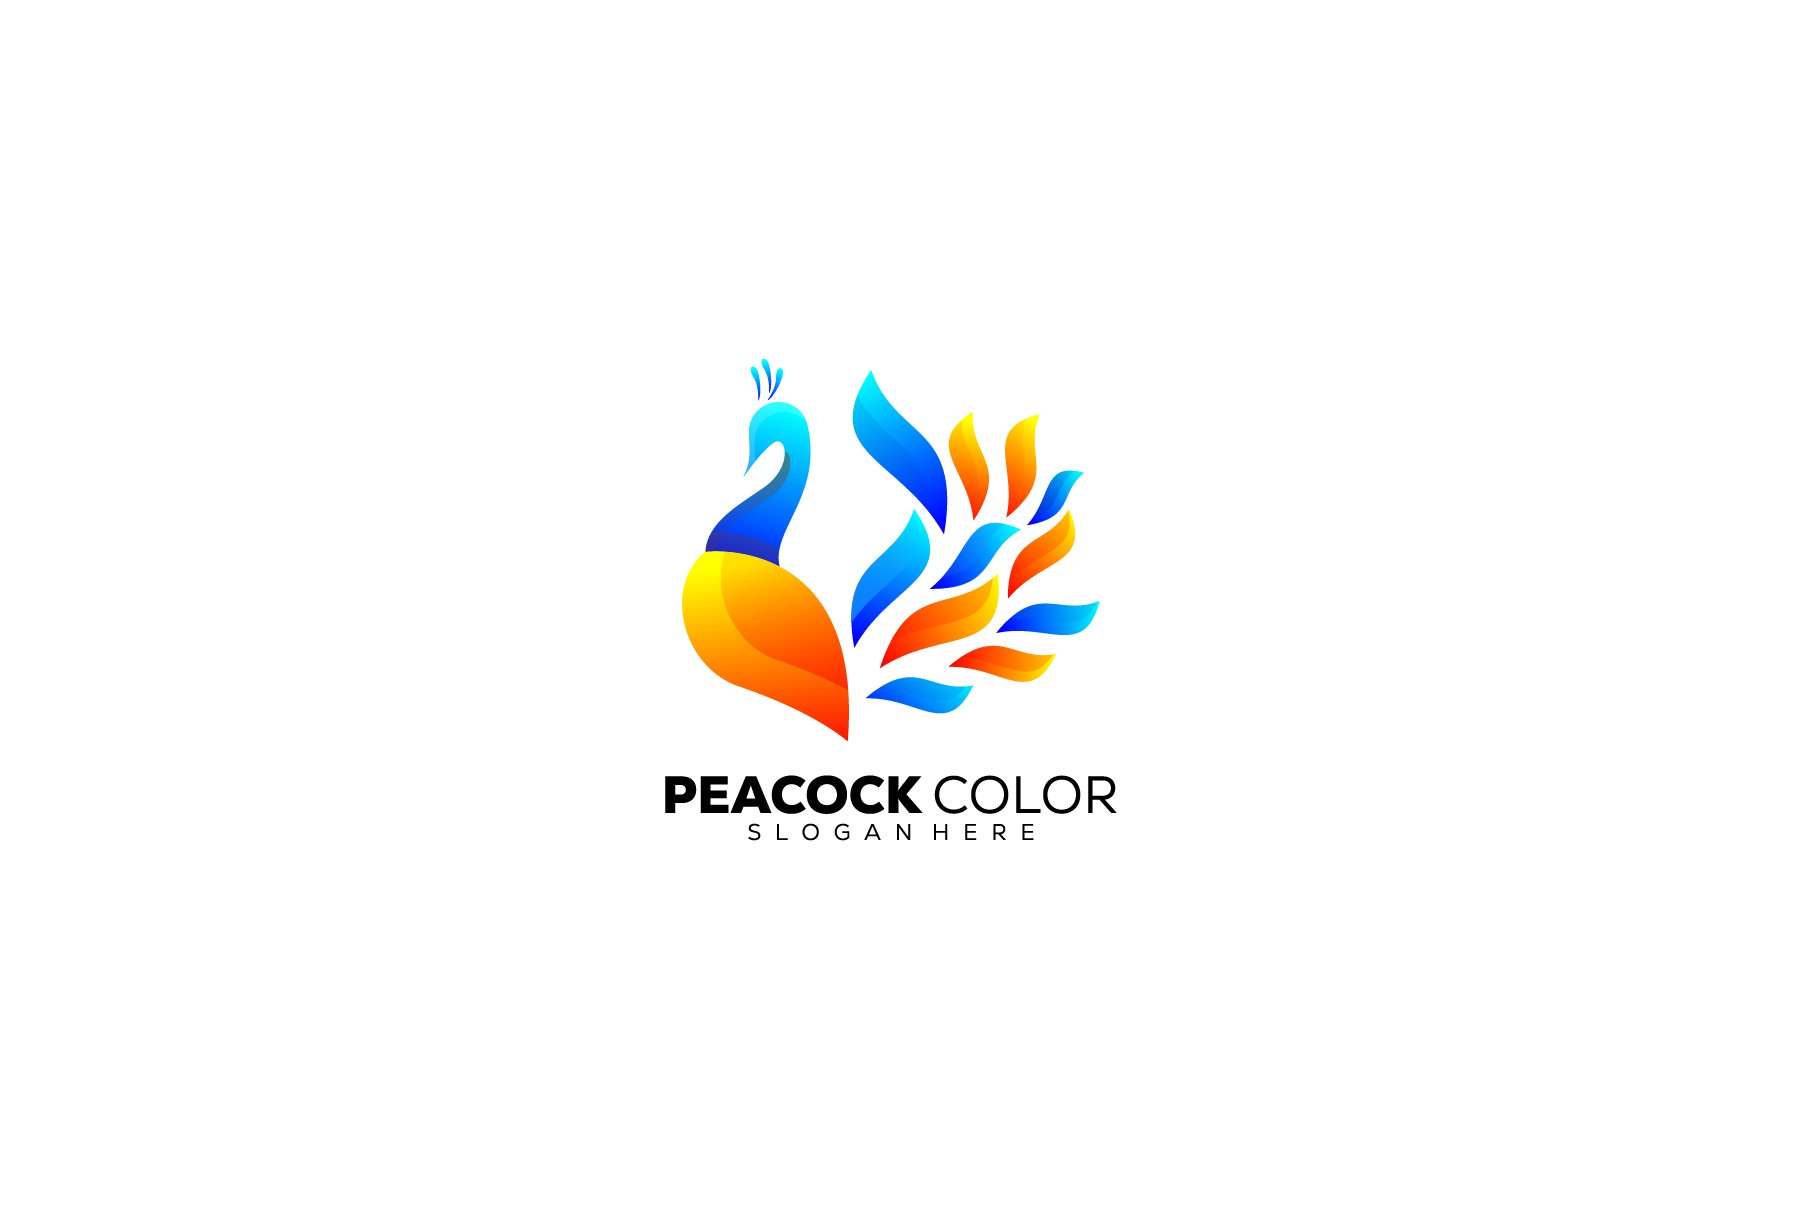 peacock logo design gradient color cover image.